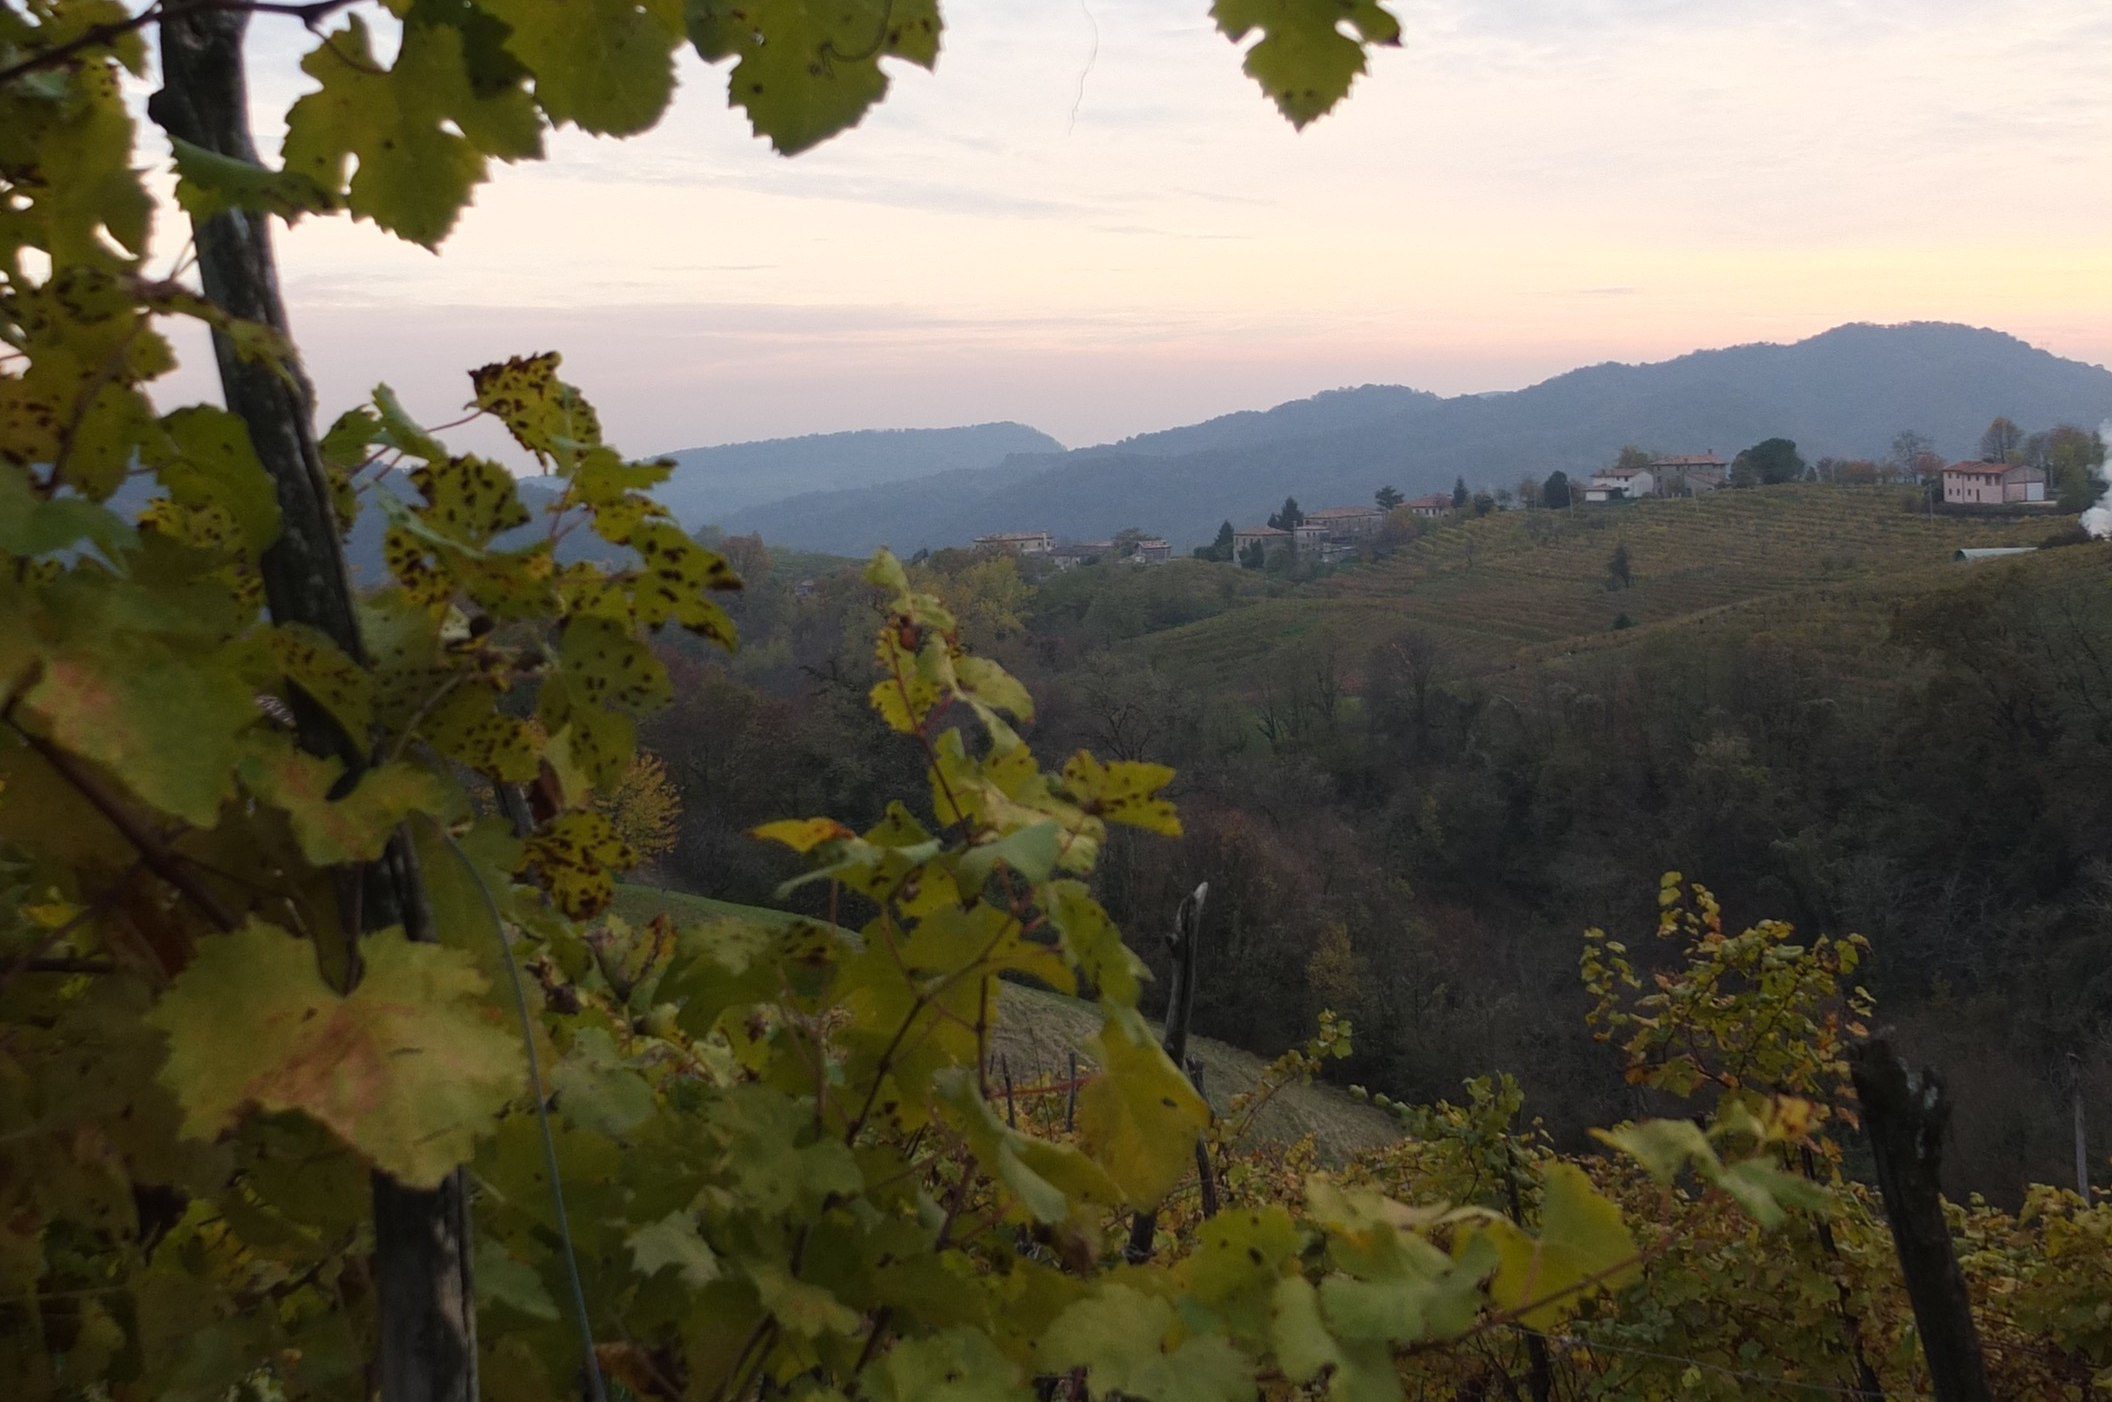 Prosecco vineyards of the Treviso region